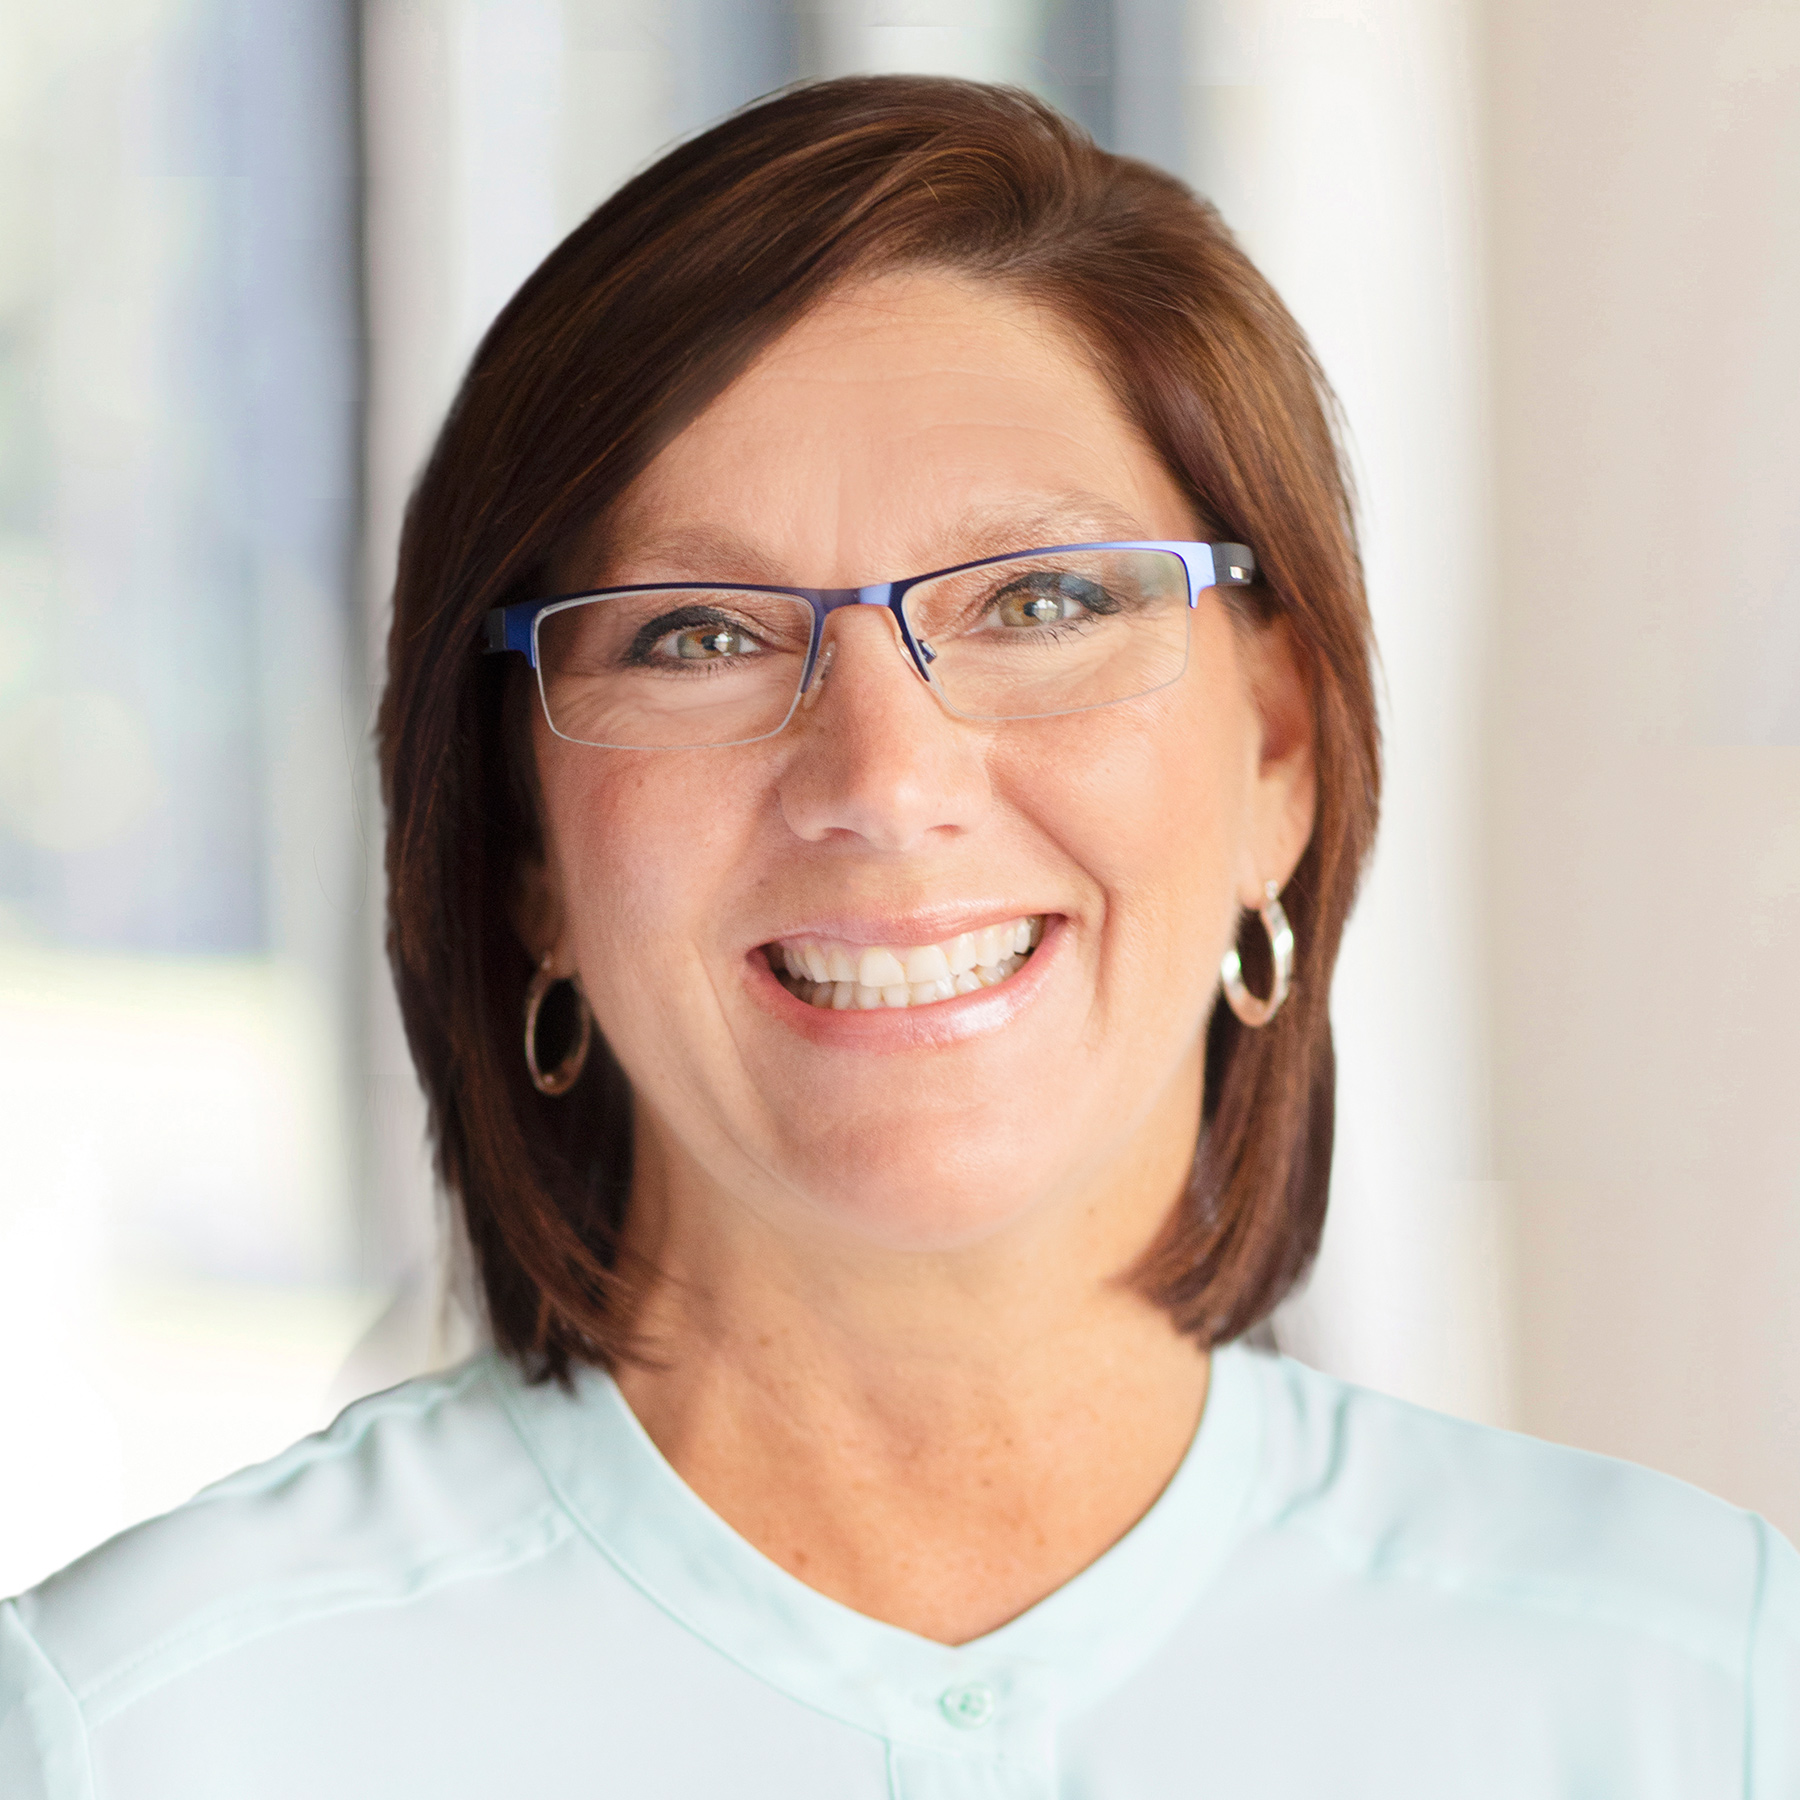 Cindy Grabowski - VP of Clinical Affairs